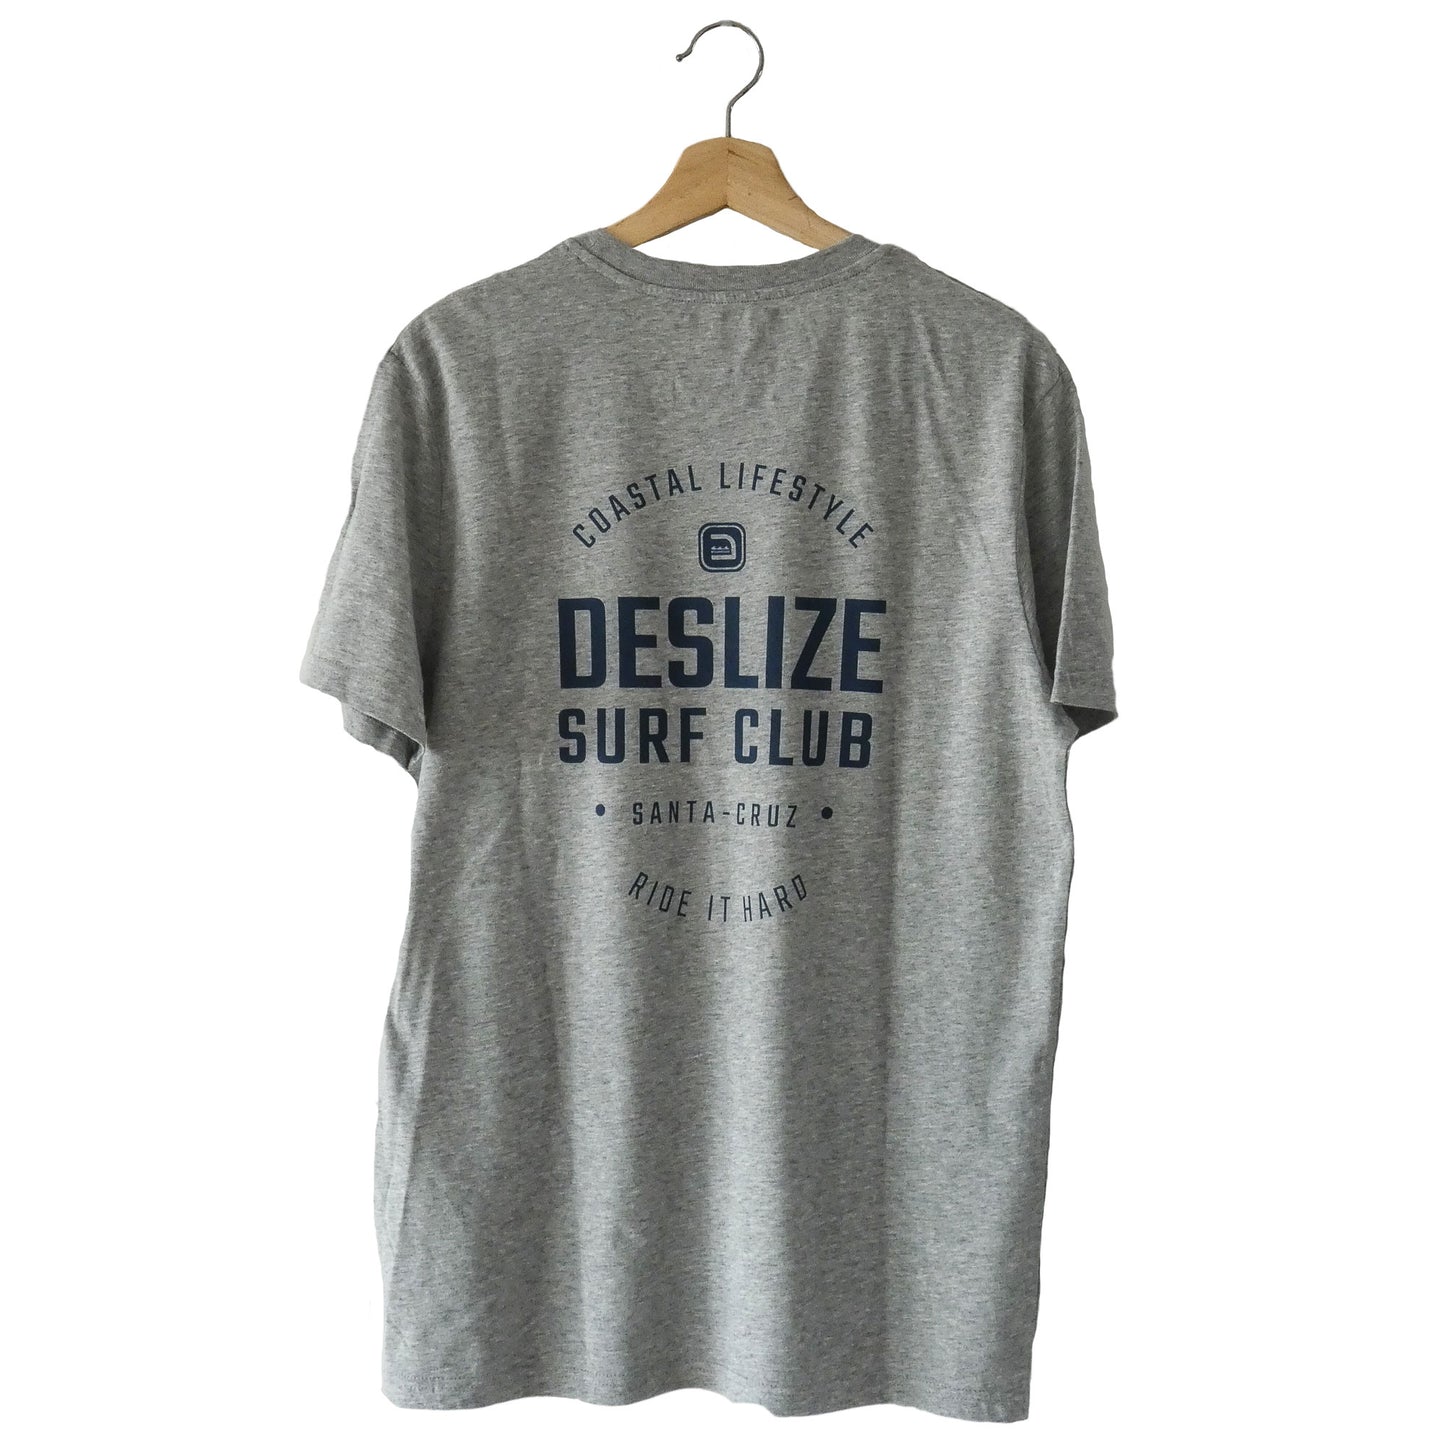 Grey Desilze Surf Club pocket Tshirt, back side